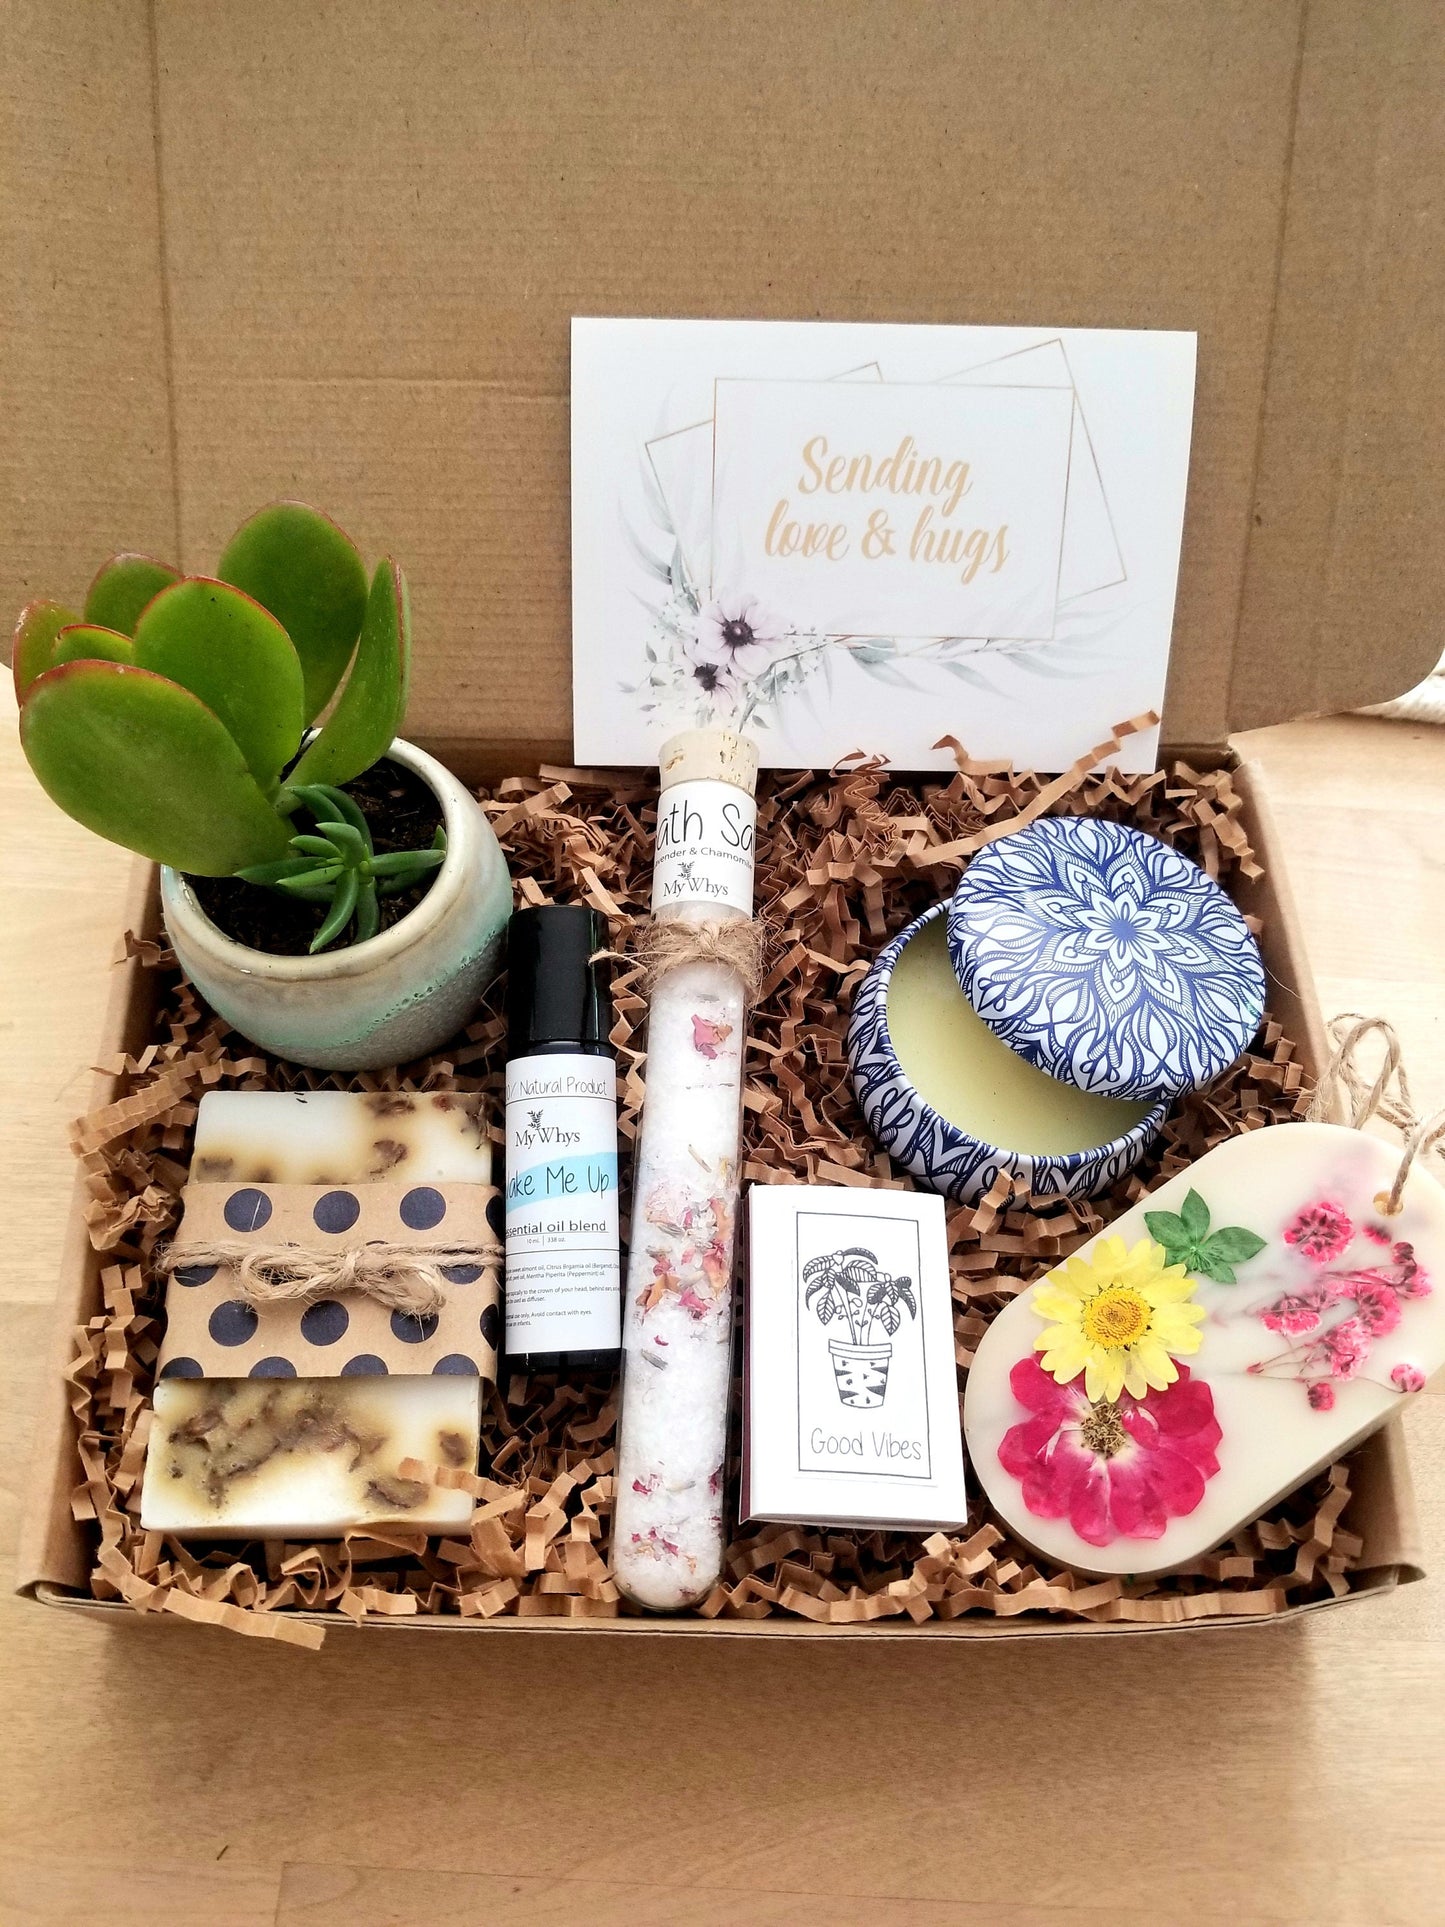 Sending love & hugs gift set, spa care package